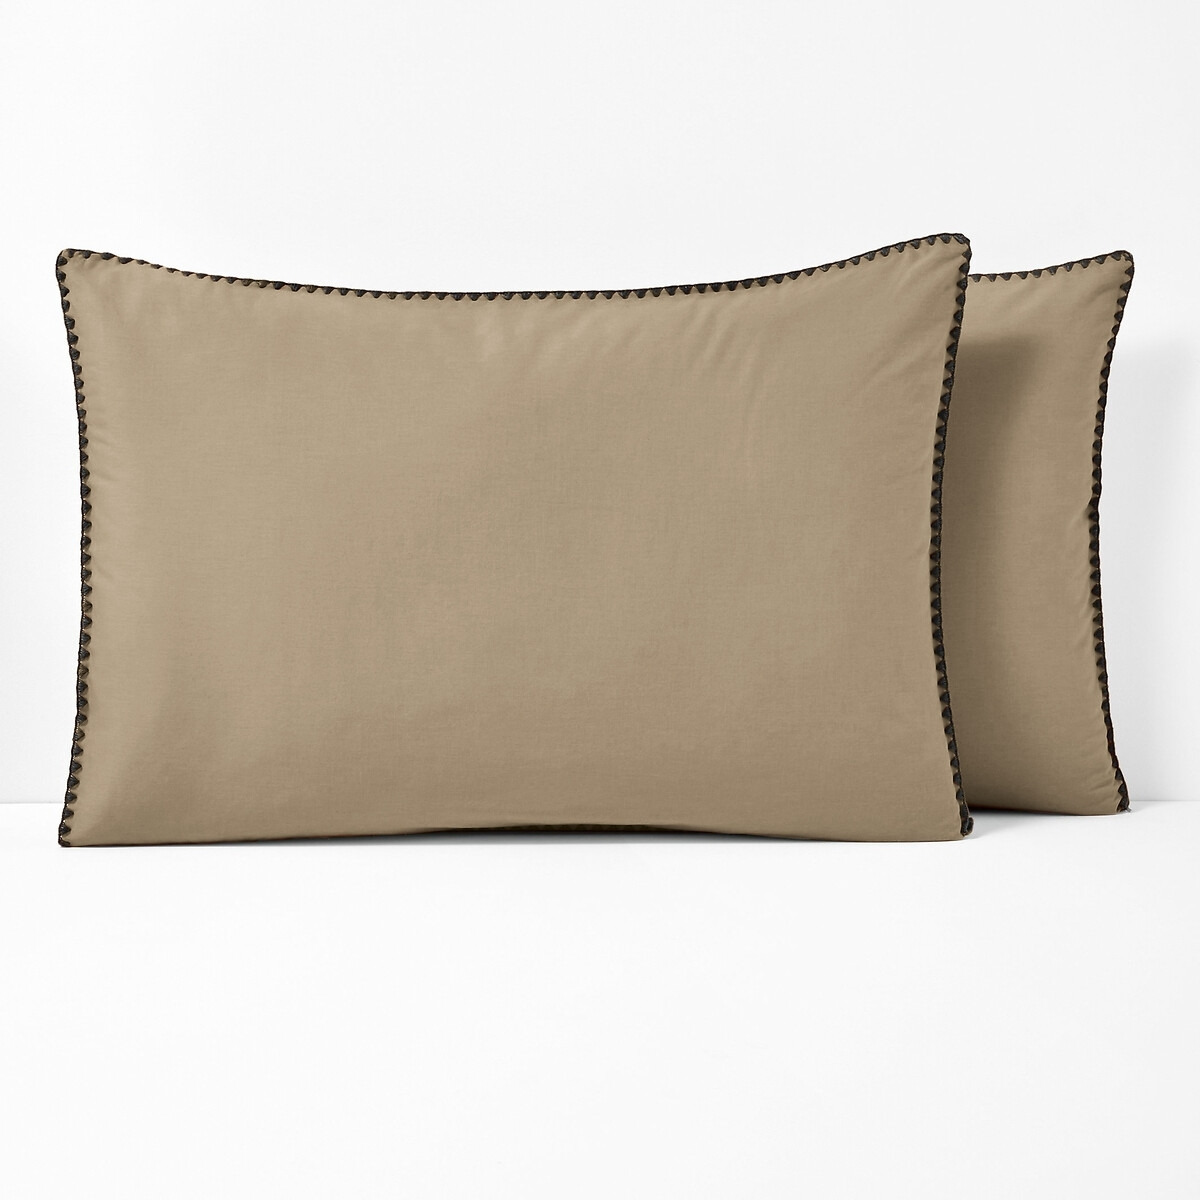 Merida Embroidered 100% Washed Cotton Pillowcase - image 1